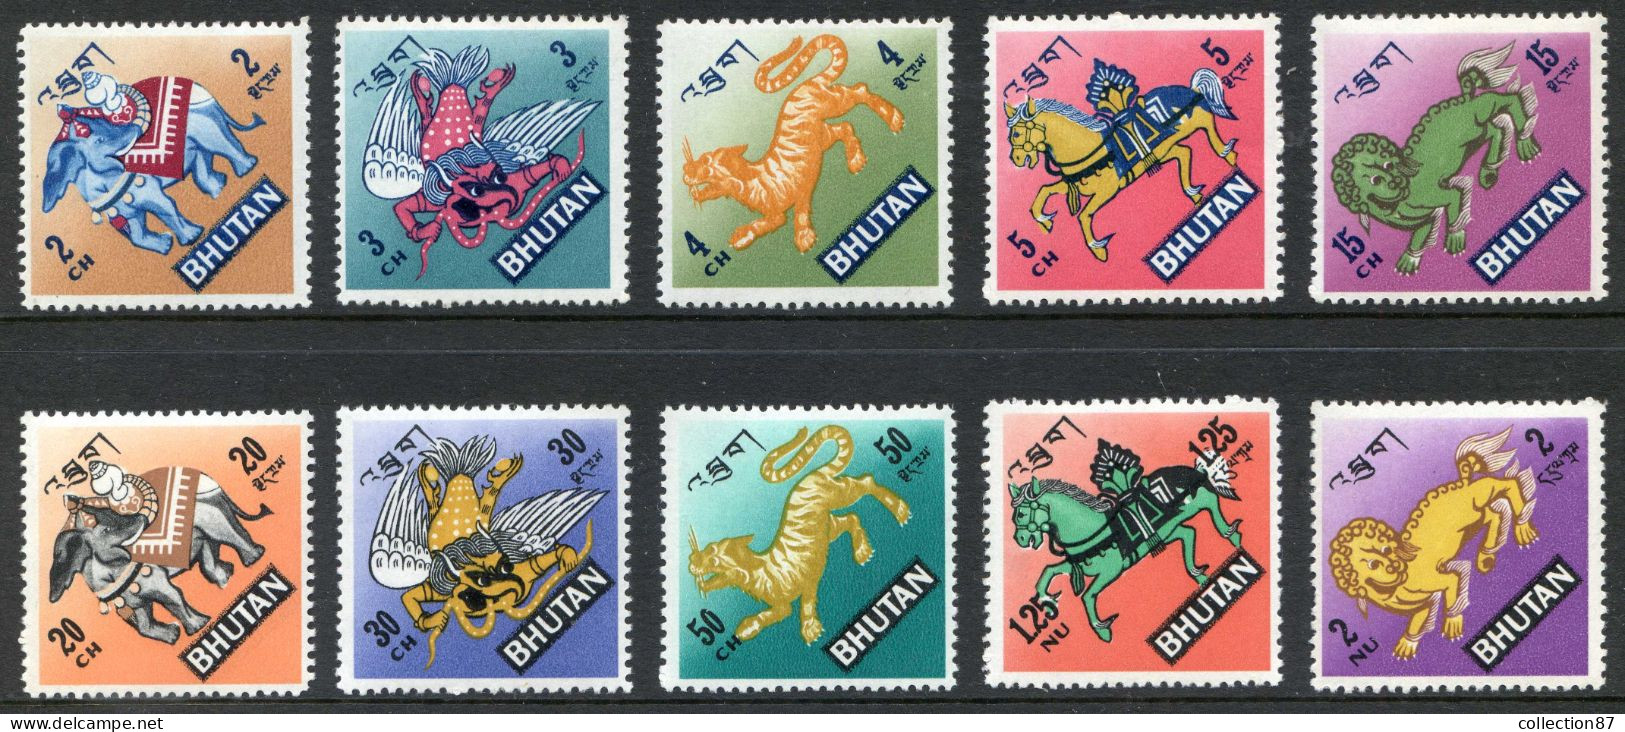 REF 002 > BHOUTAN < Yvert  N° 160 à 169 * * Neuf Luxe MNH * * > ELEPHANT - LION - TIGRE - CHEVAL - Bhutan